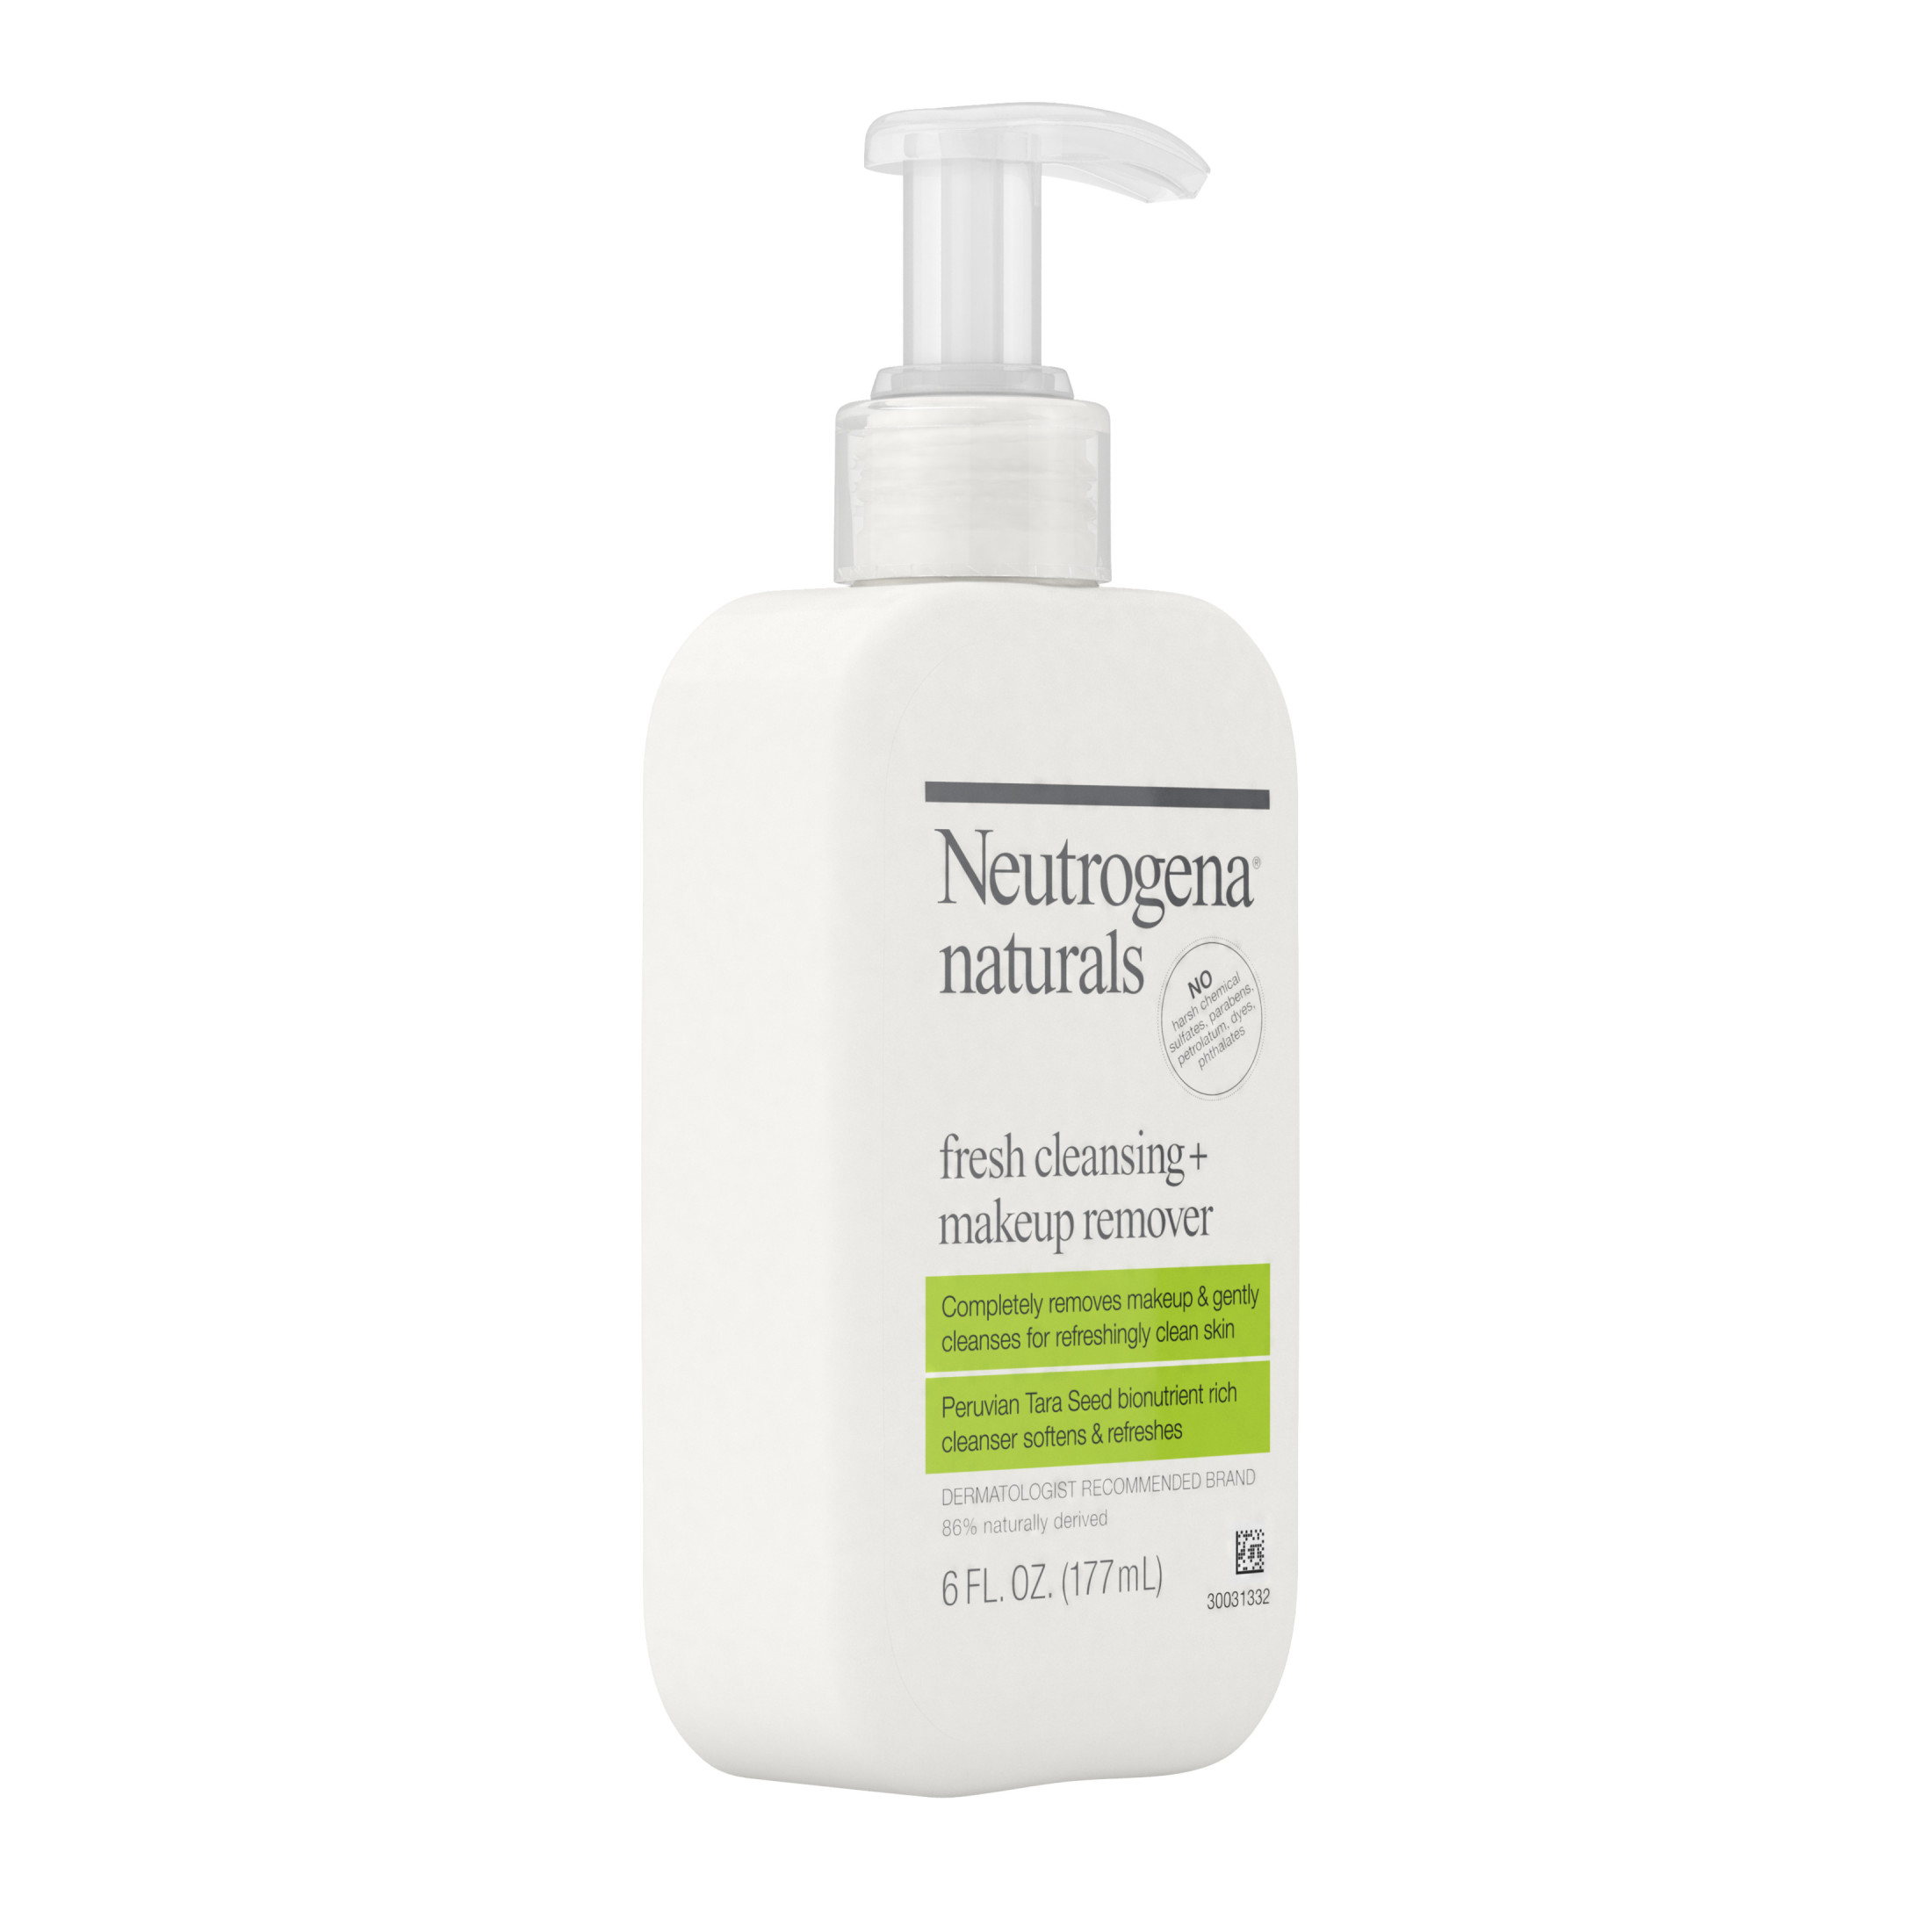 Neutrogena Naturals Fresh Face Cleanser + Makeup Remover, 6 fl. oz - image 3 of 6